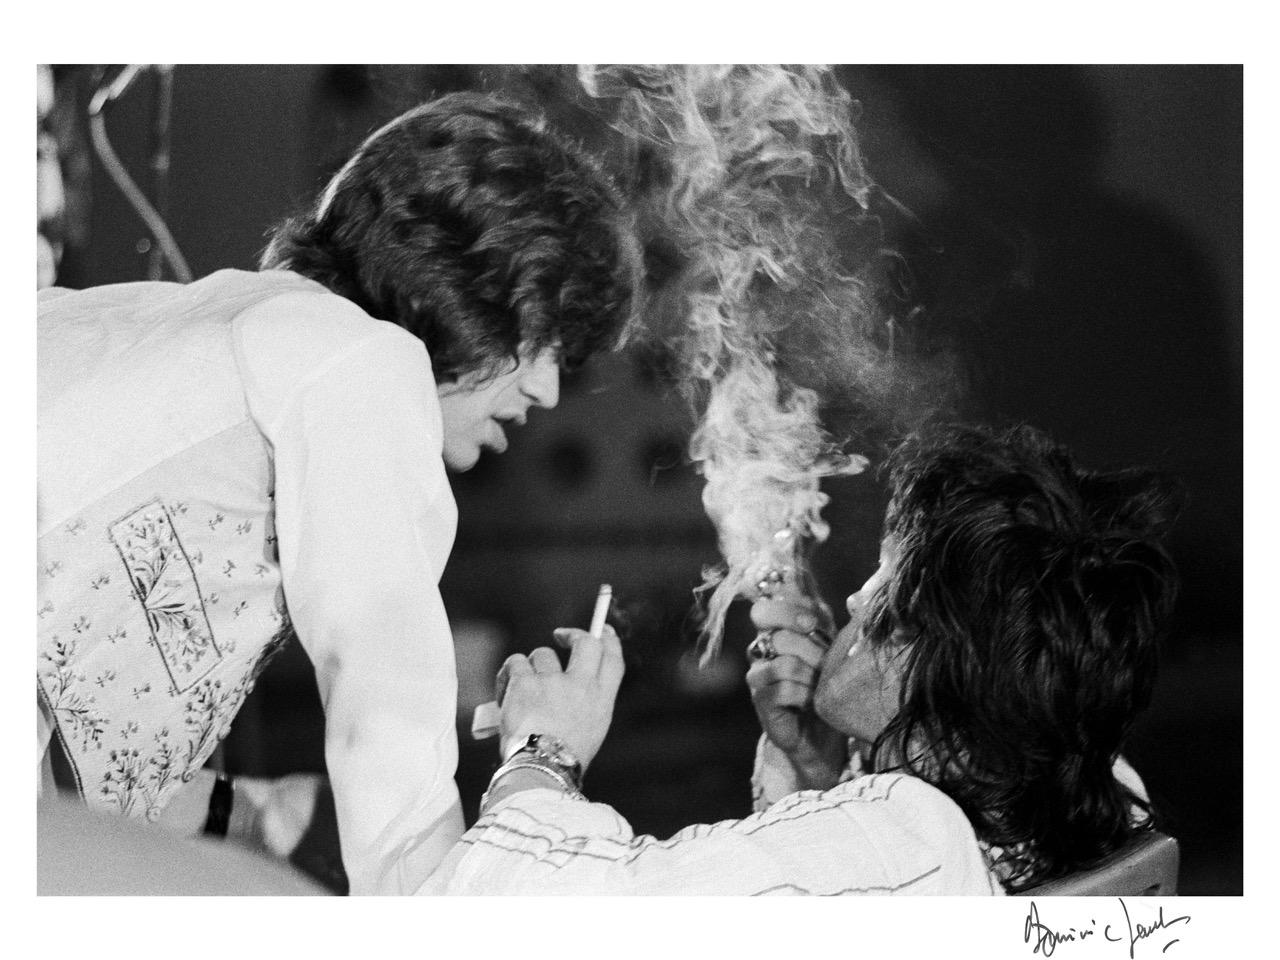 Dominic Lamblin Black and White Photograph – Hochgehoben! Mick Jagger und Keith Richards 1976 Fotografie Schwarz-Weiß 7/50